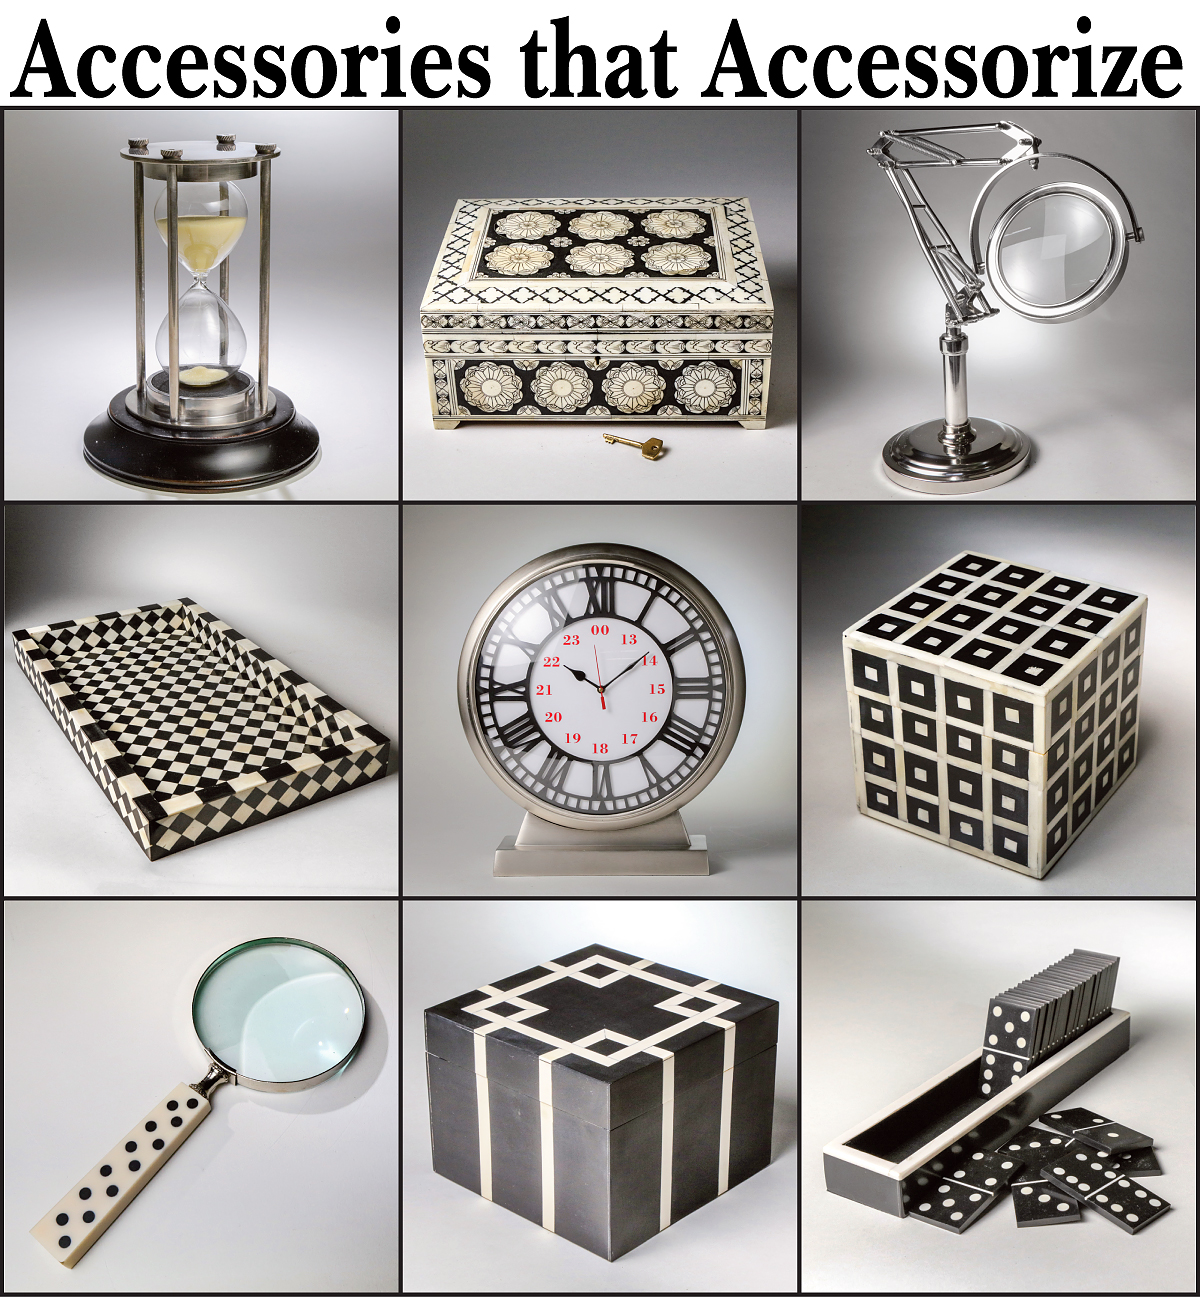 Accessories that Accessorize